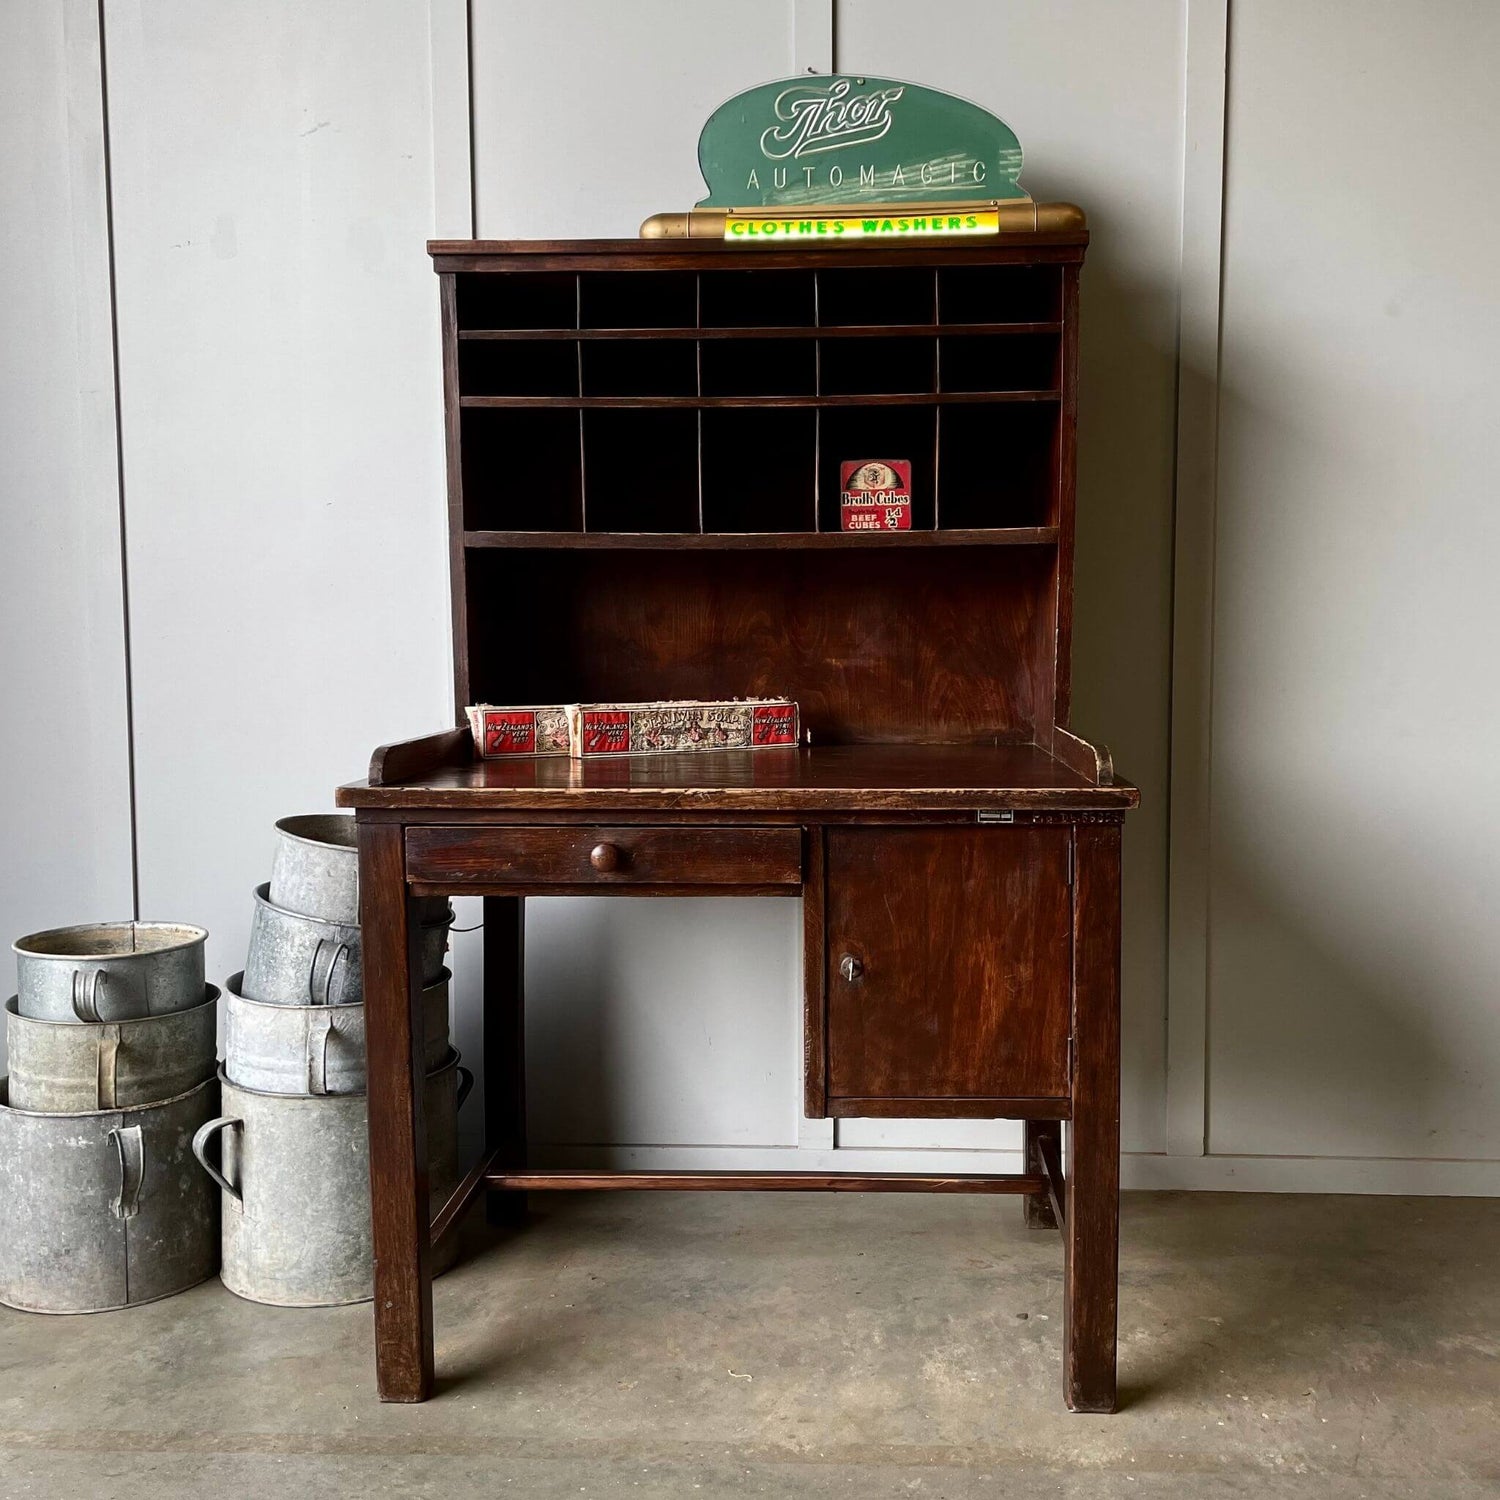 Antique table, post office clerks desk